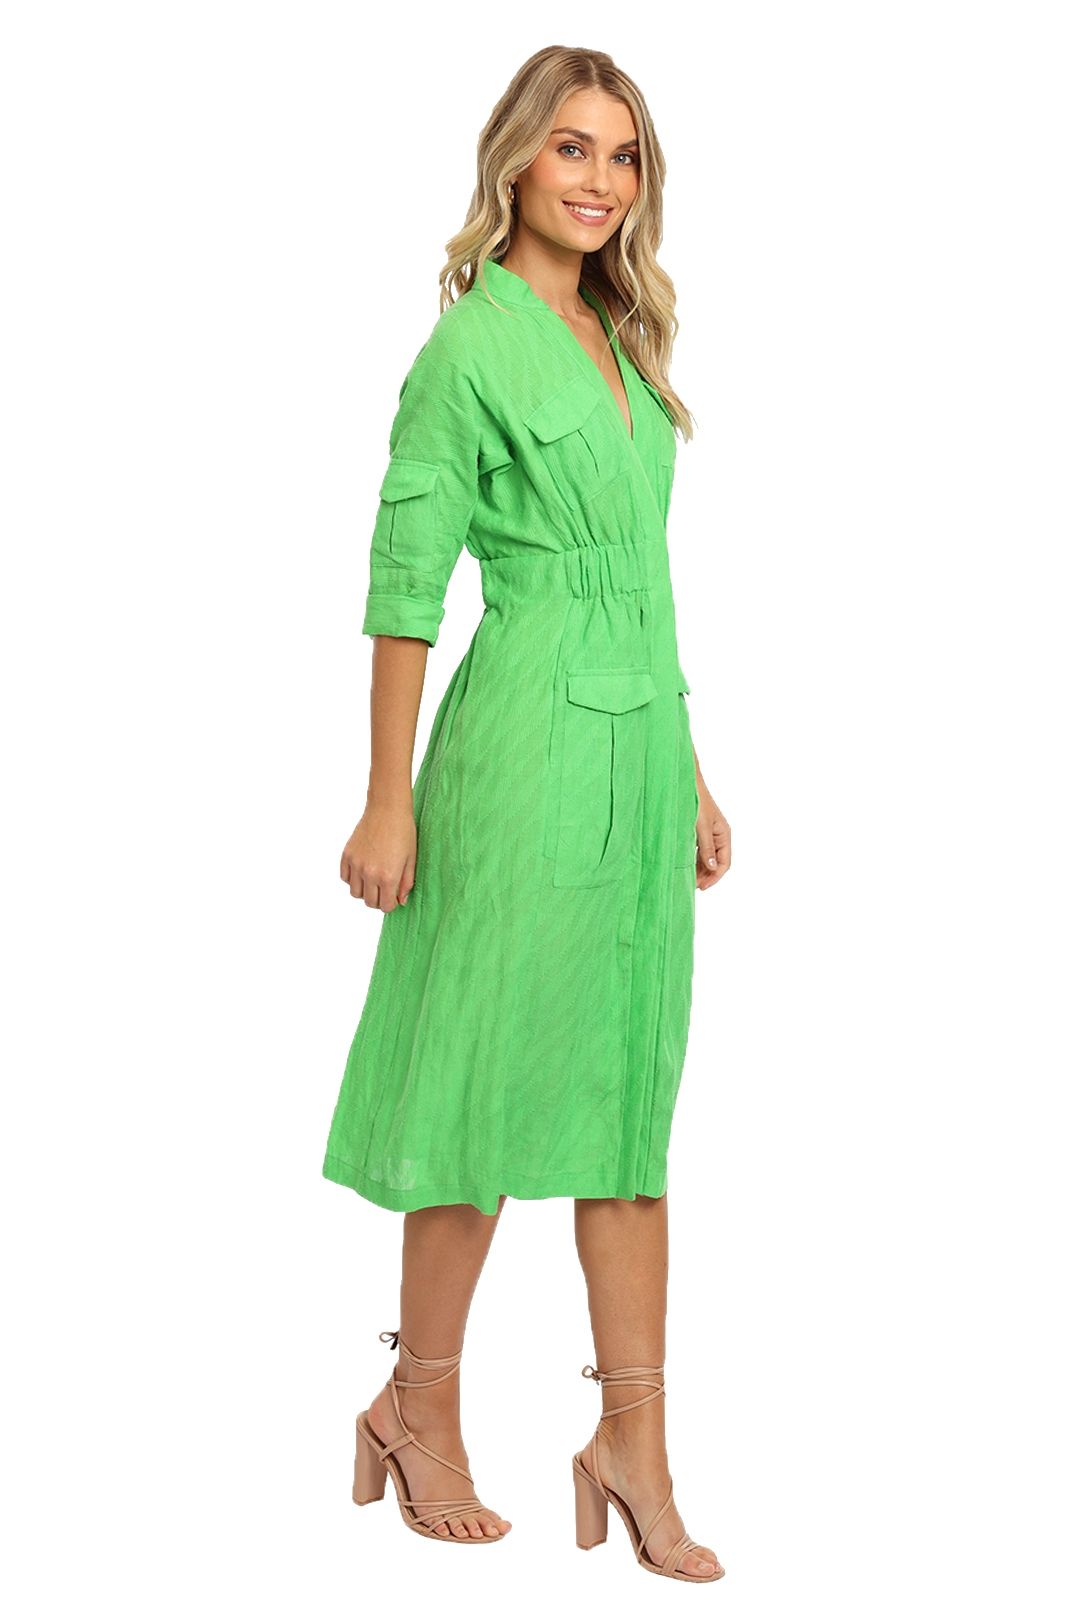 KITX Linen Safari Dress Green zip pockets